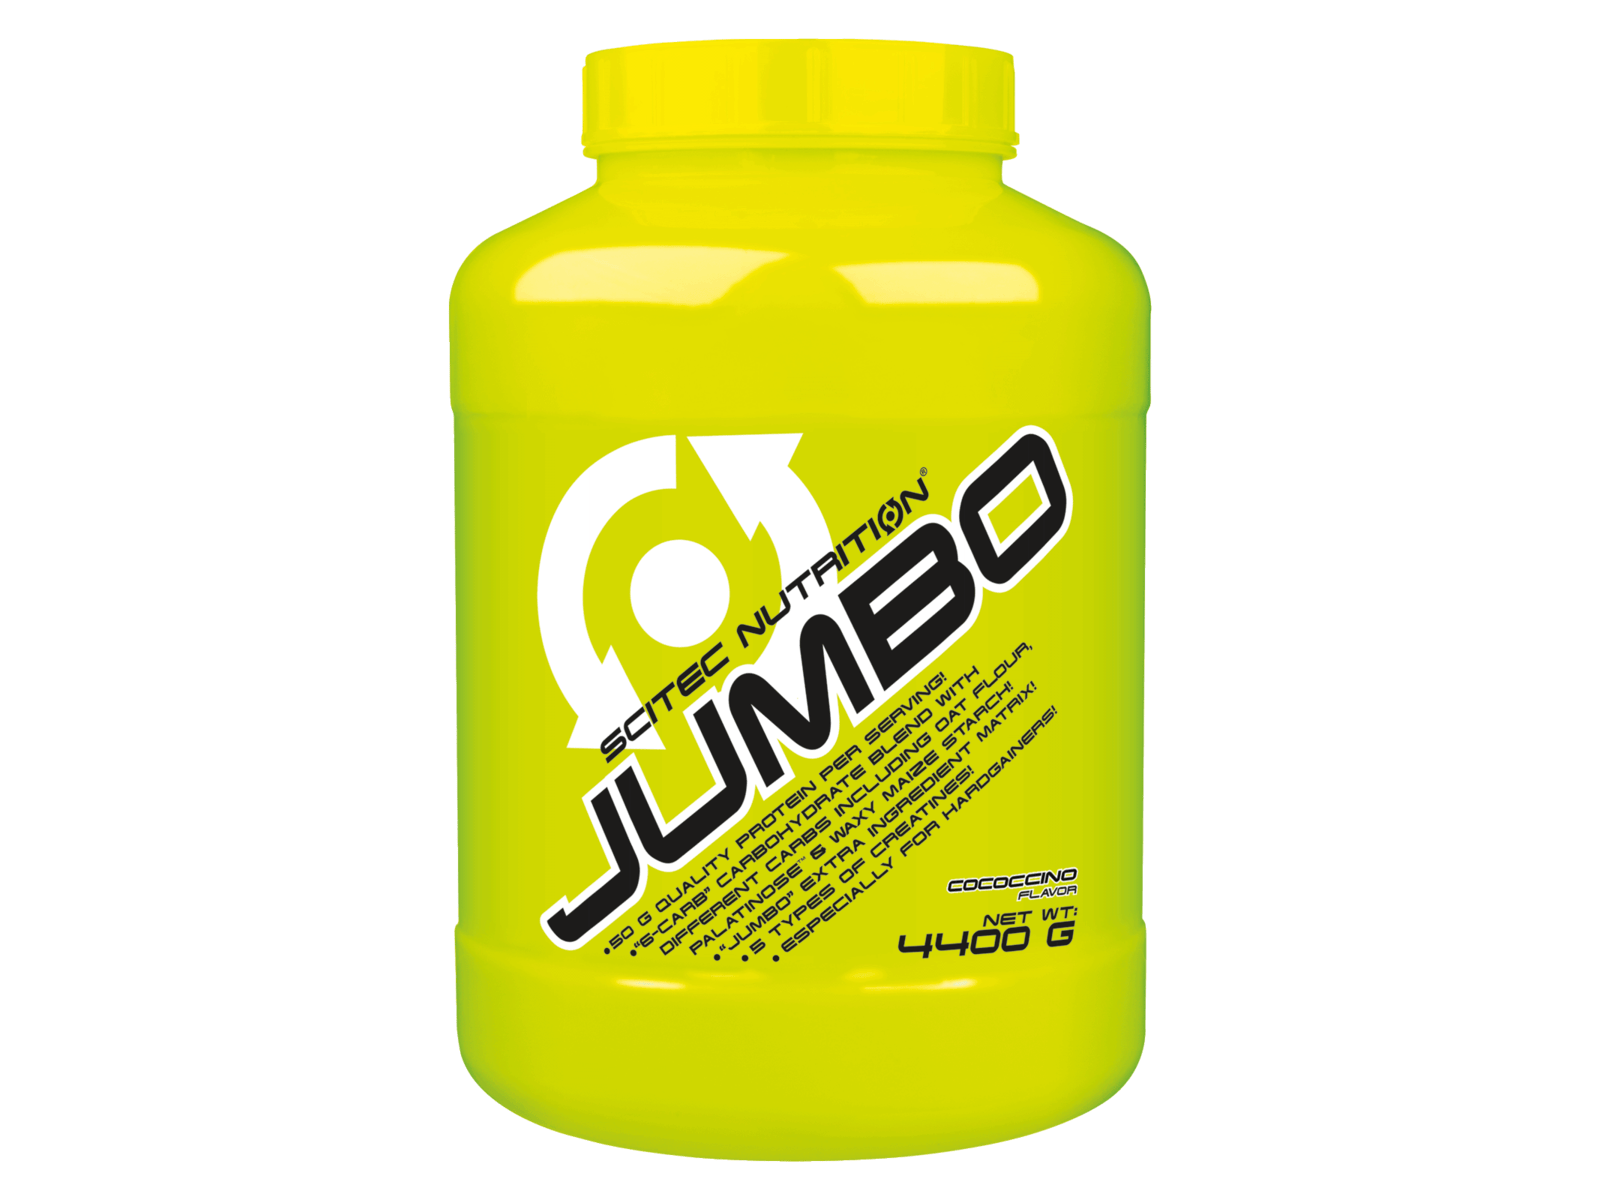 Scitec Nutrition - Jumbo (Chocolate - 1320 gram)